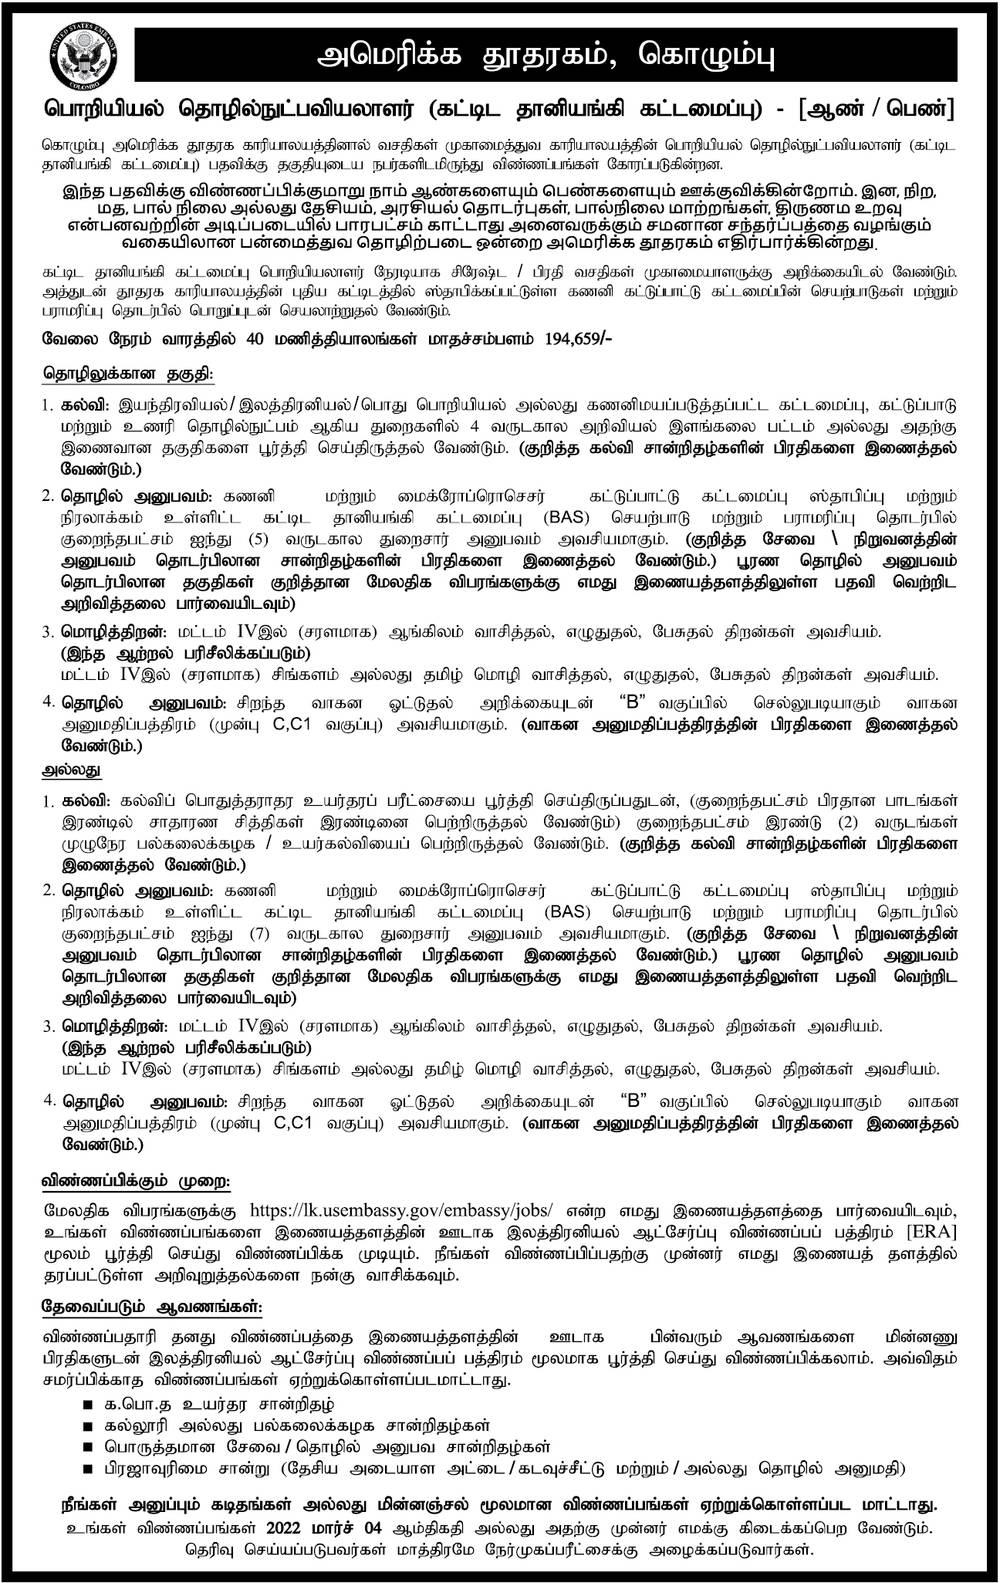 Engineering Technician Job Vacancy in American Embassy Tamil Details